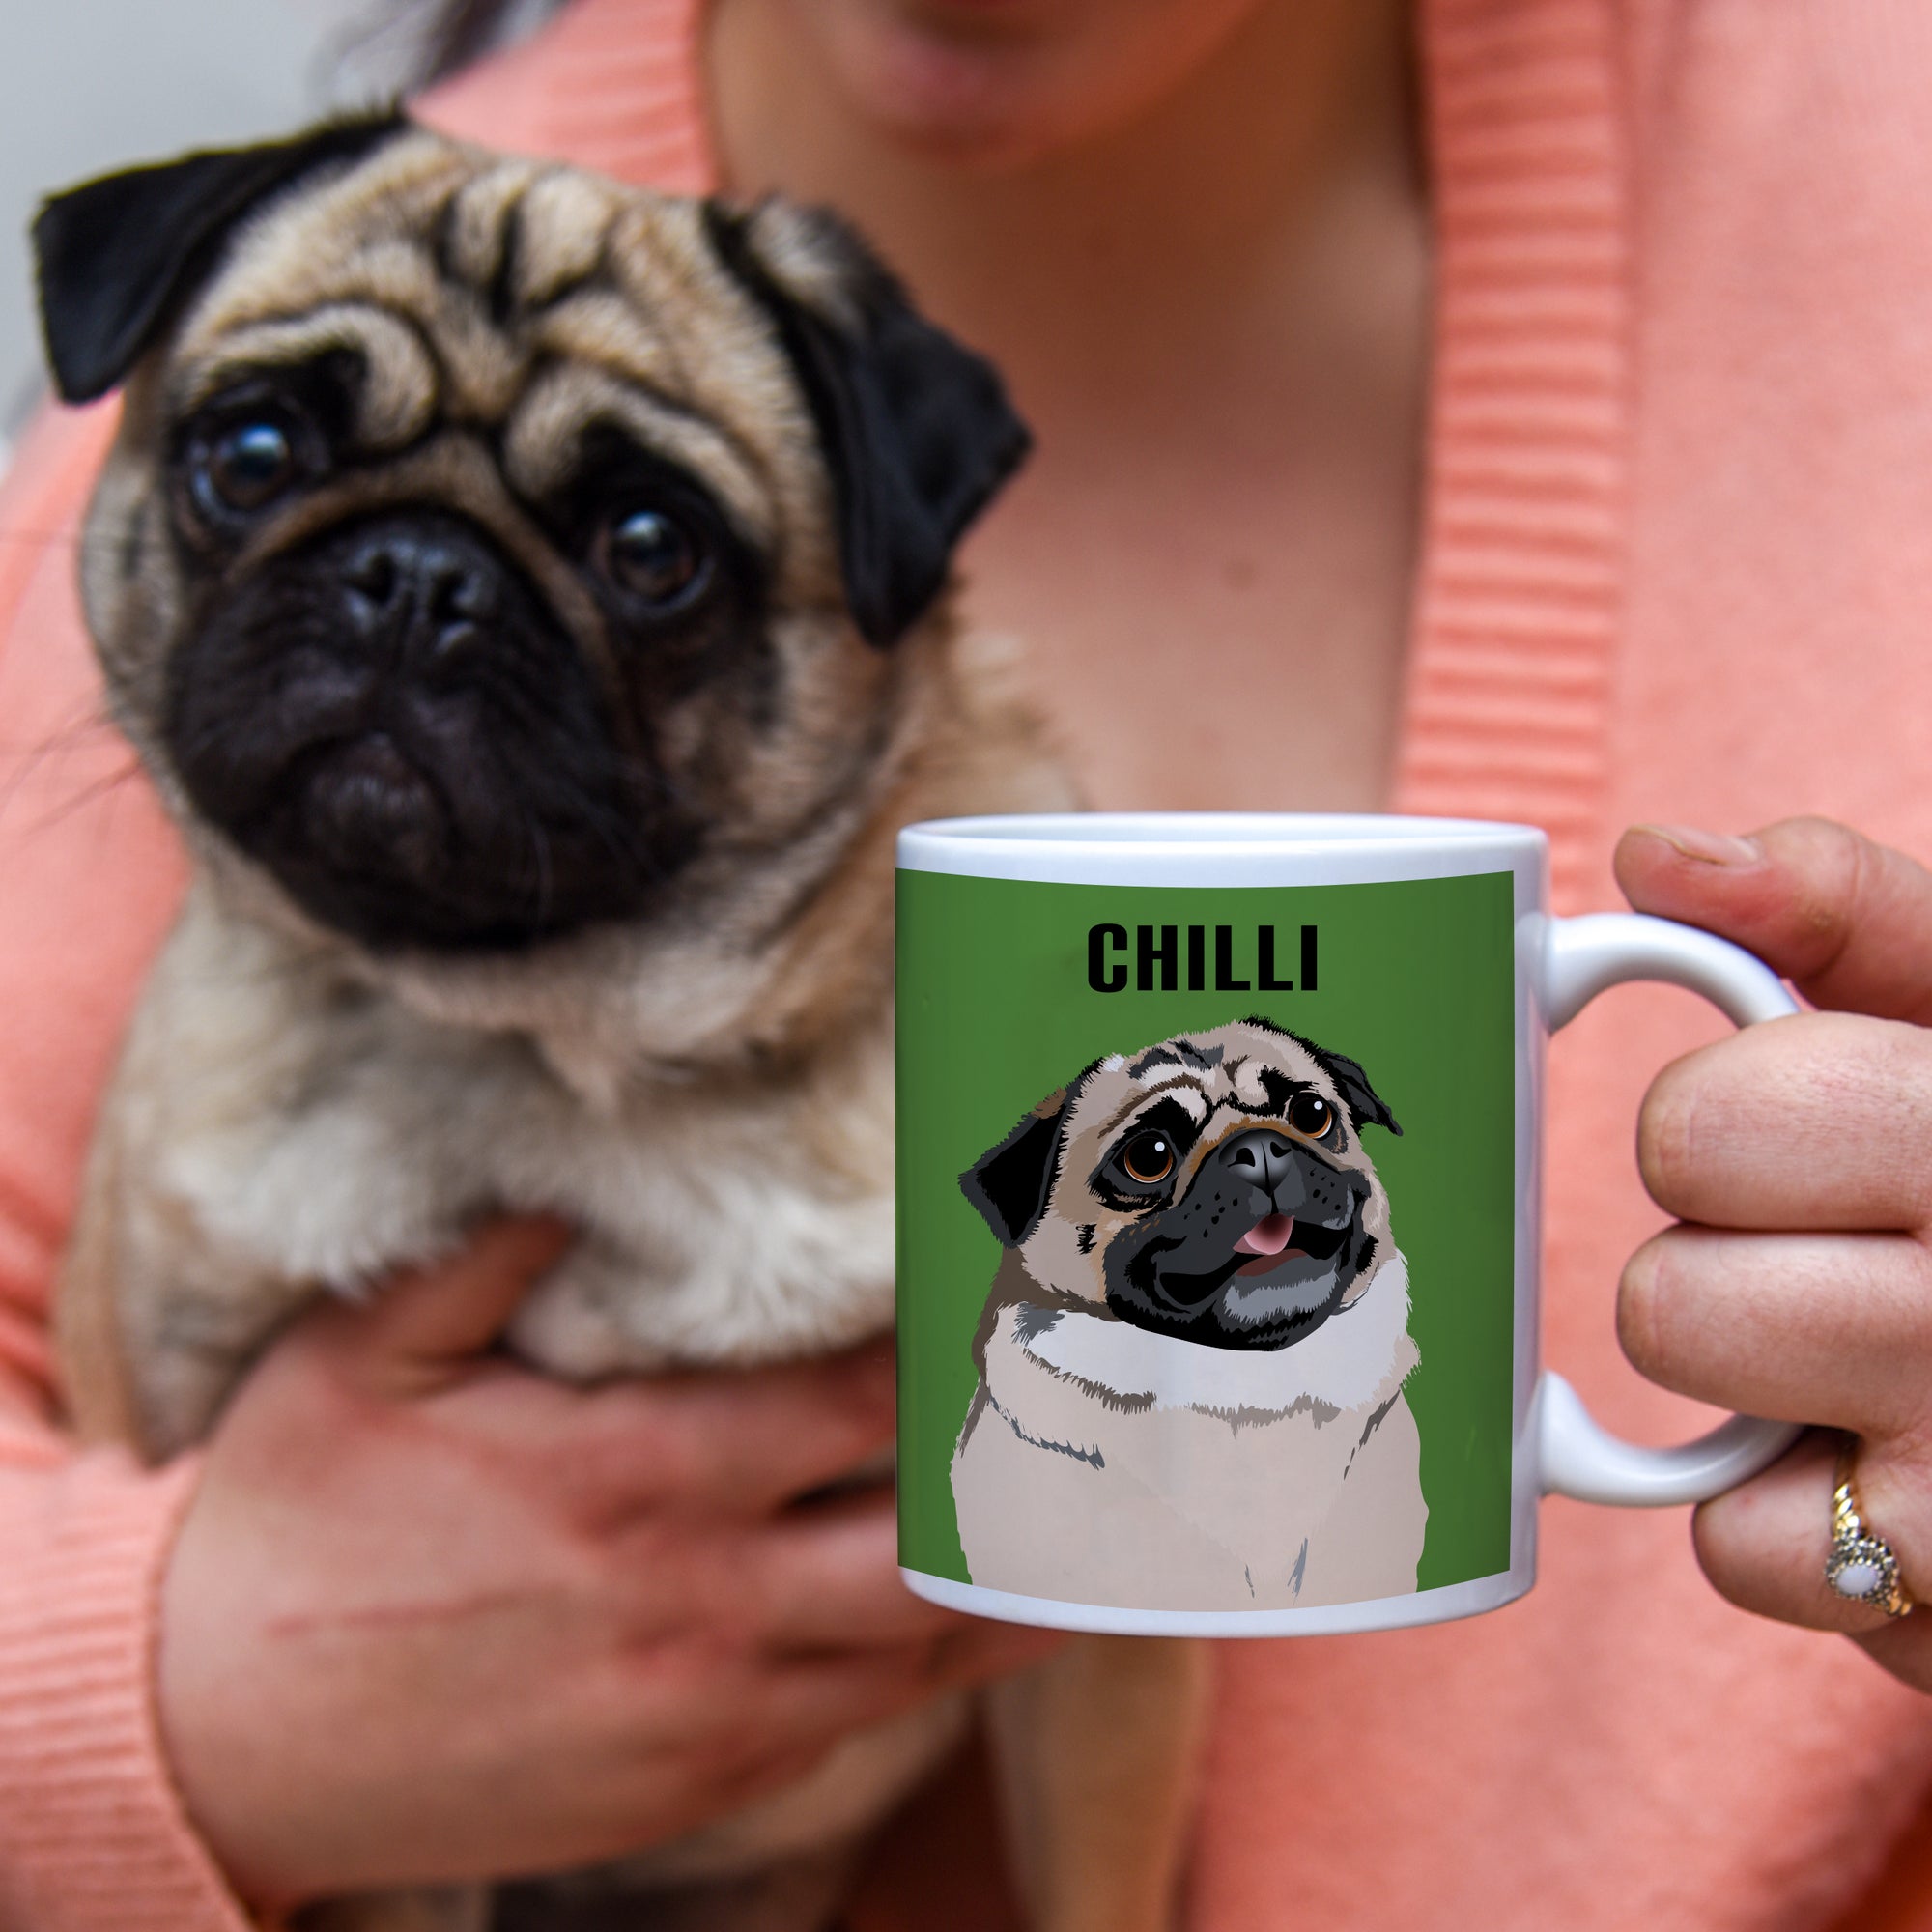 Draw My Pet... on a mug